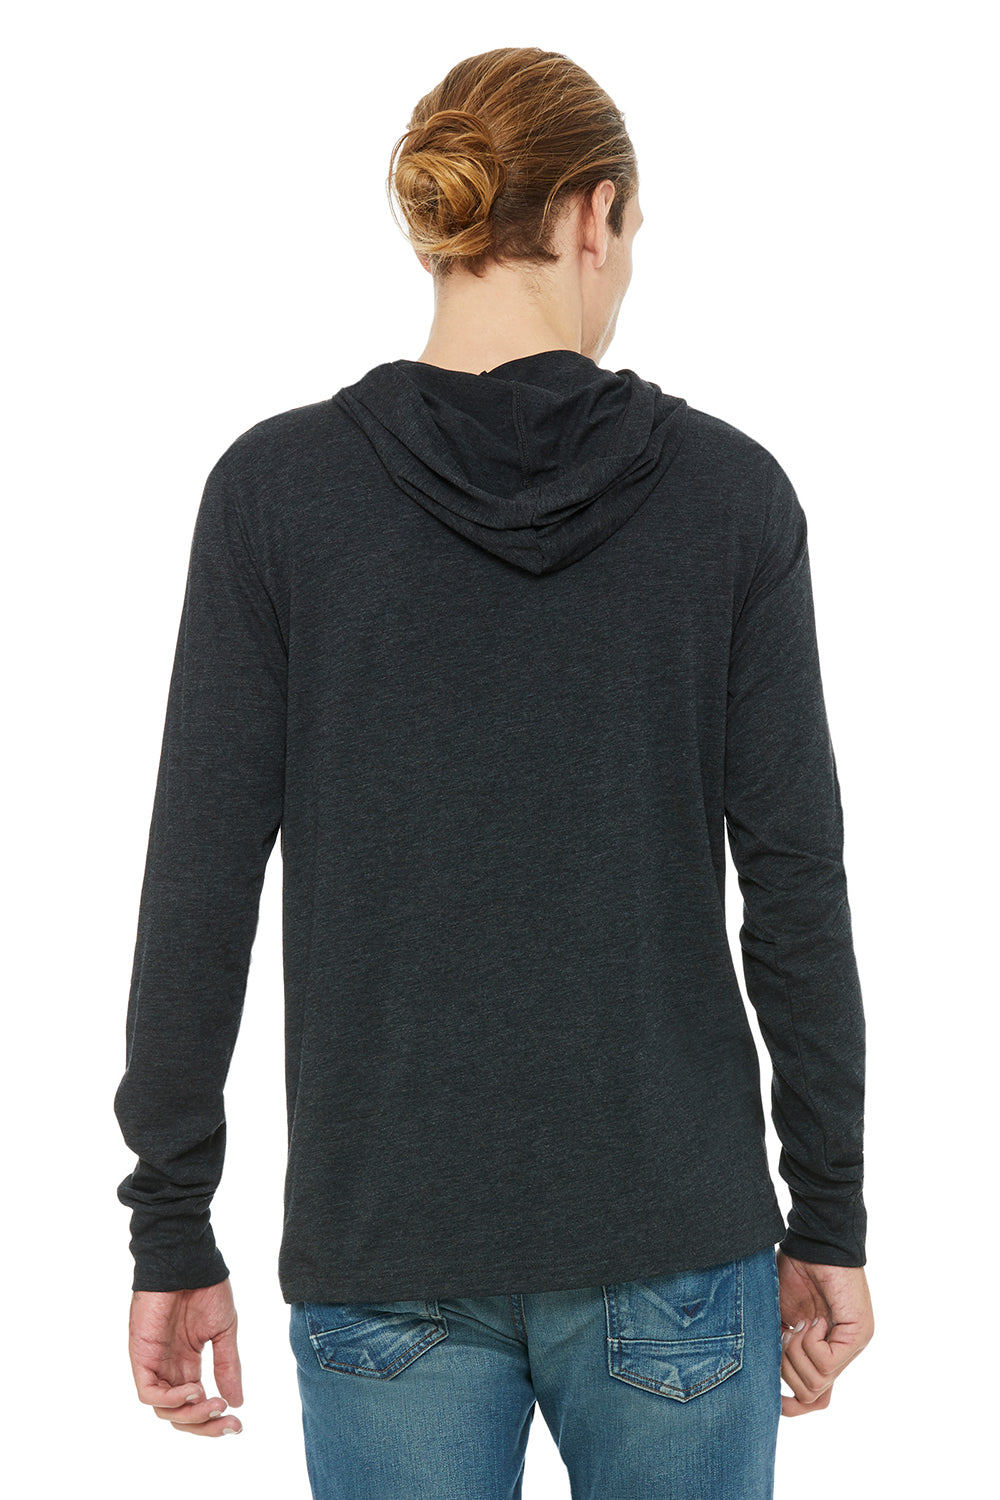 Bella + Canvas BC3512/3512 Mens Jersey Long Sleeve Hooded T-Shirt Hoodie Charcoal Black Model Back